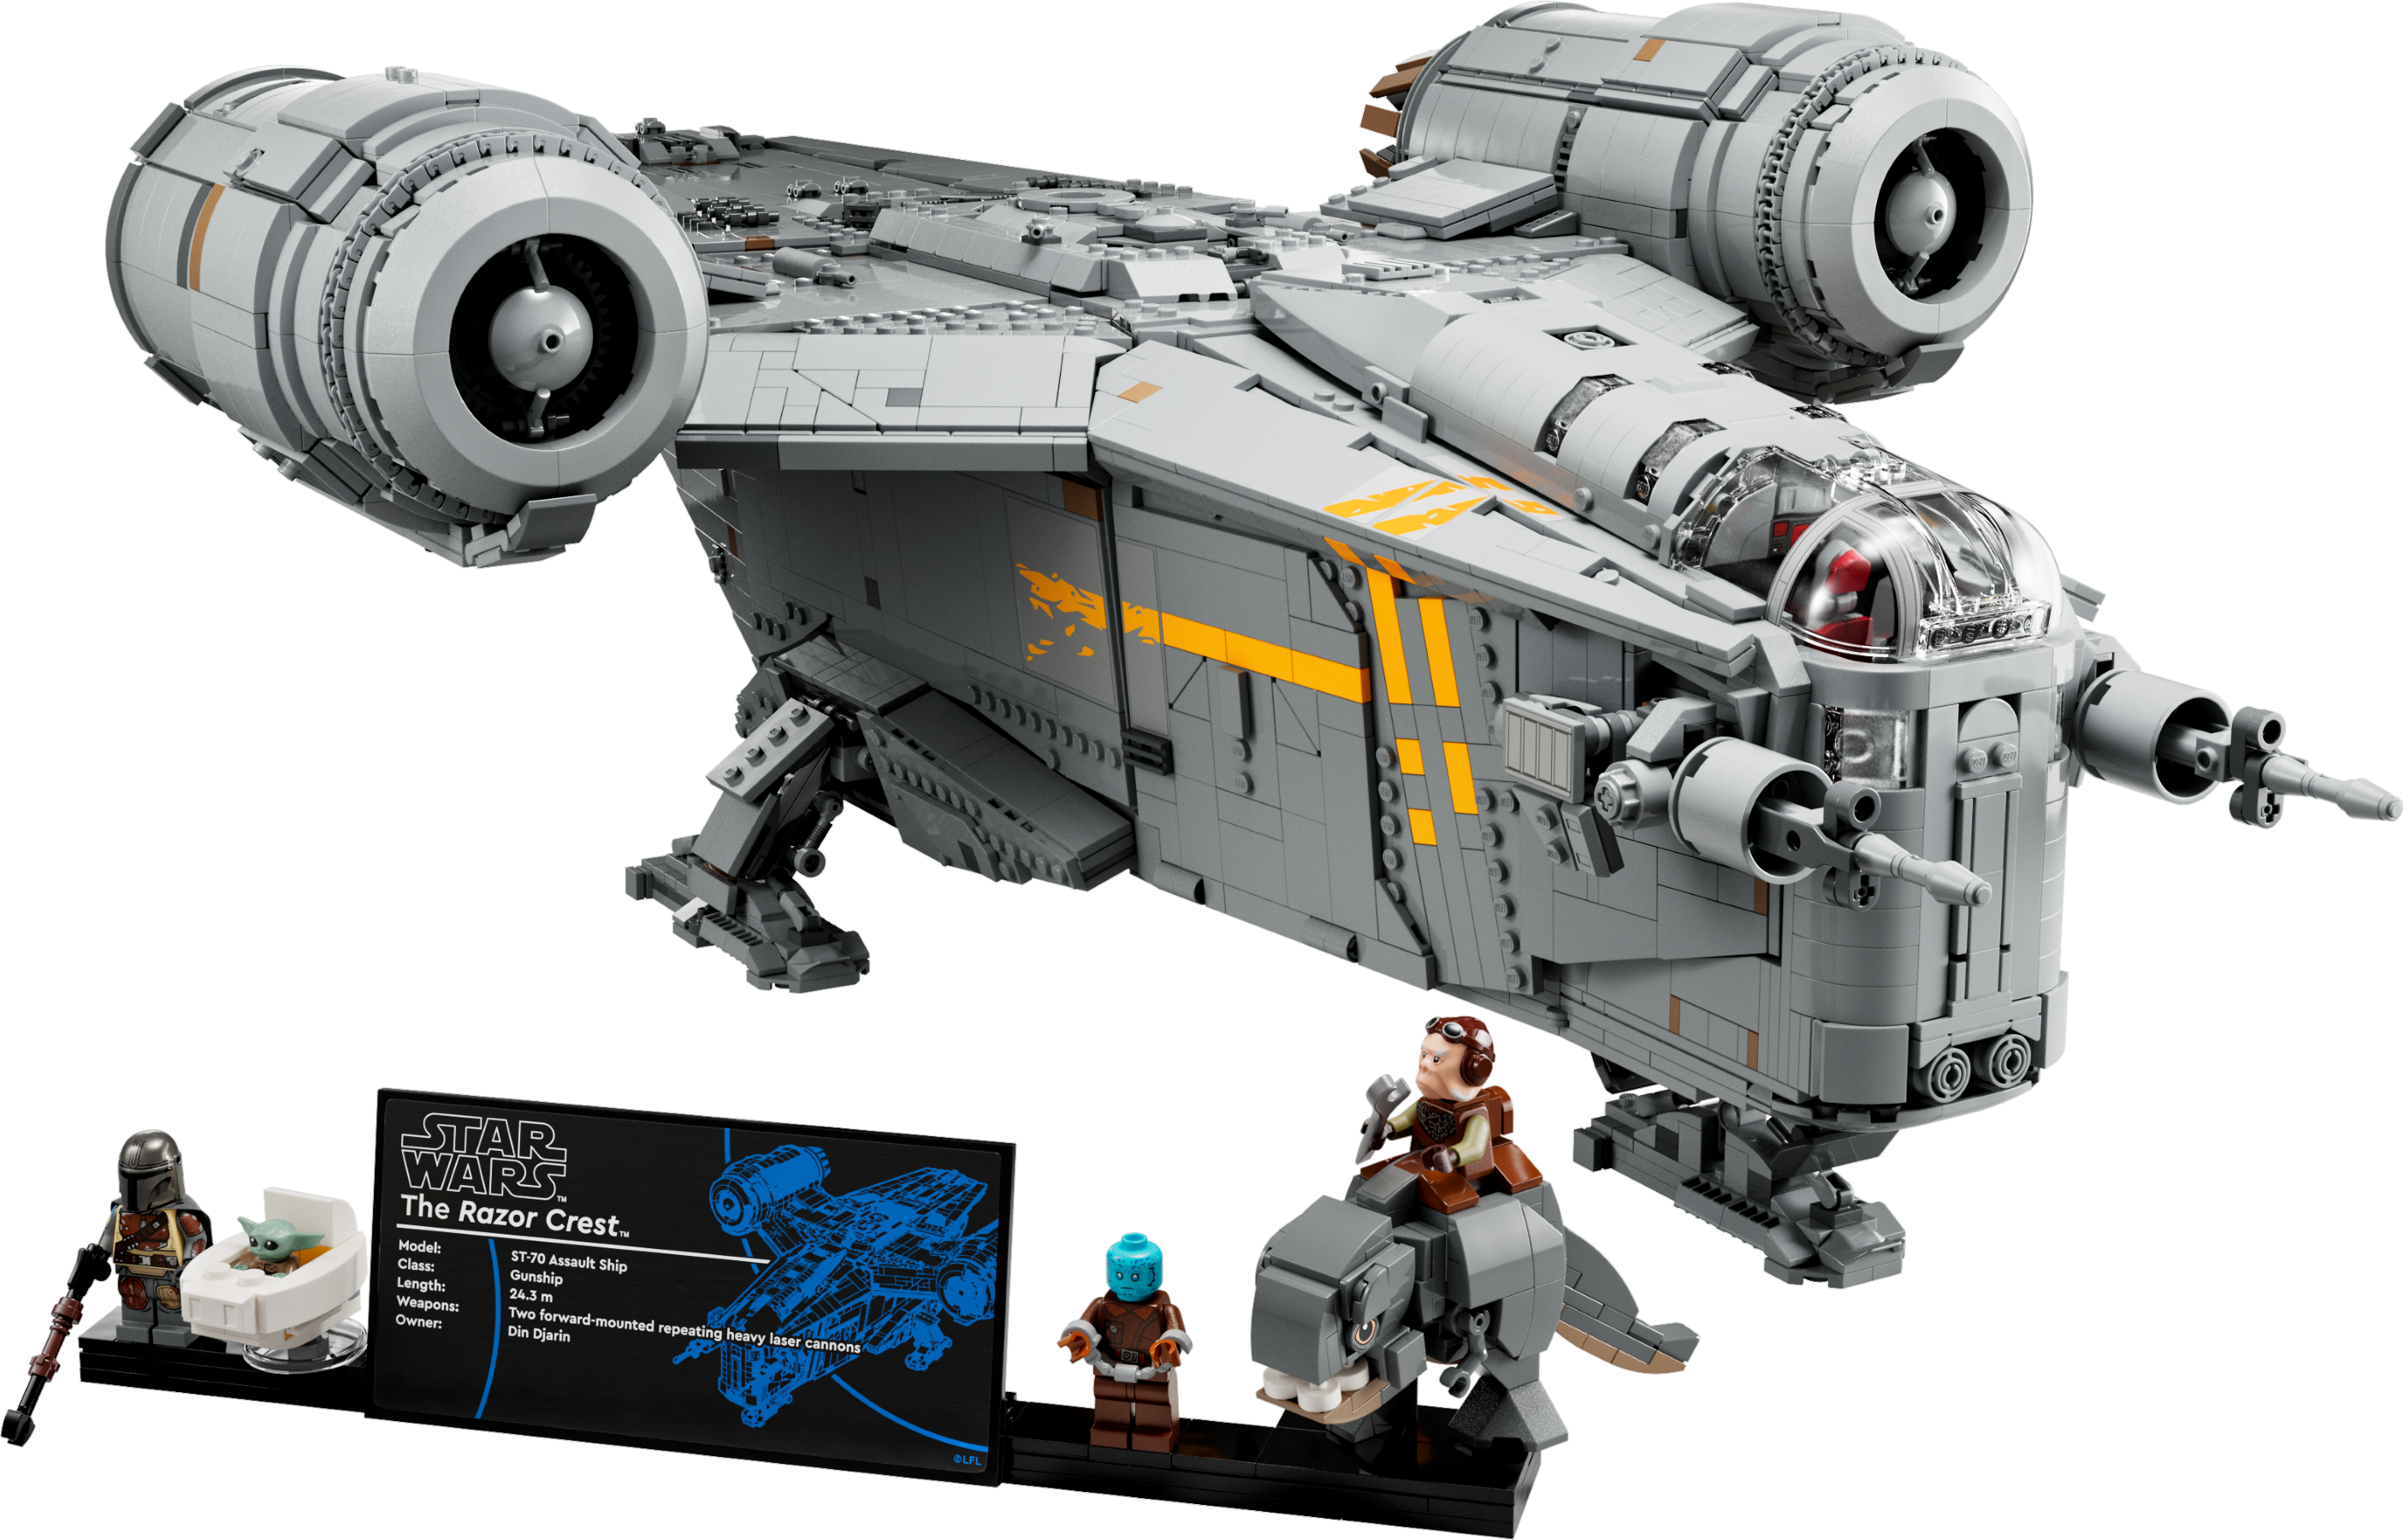 $650 LEGO UCS Venator Is The Ultimate Clone Wars Set